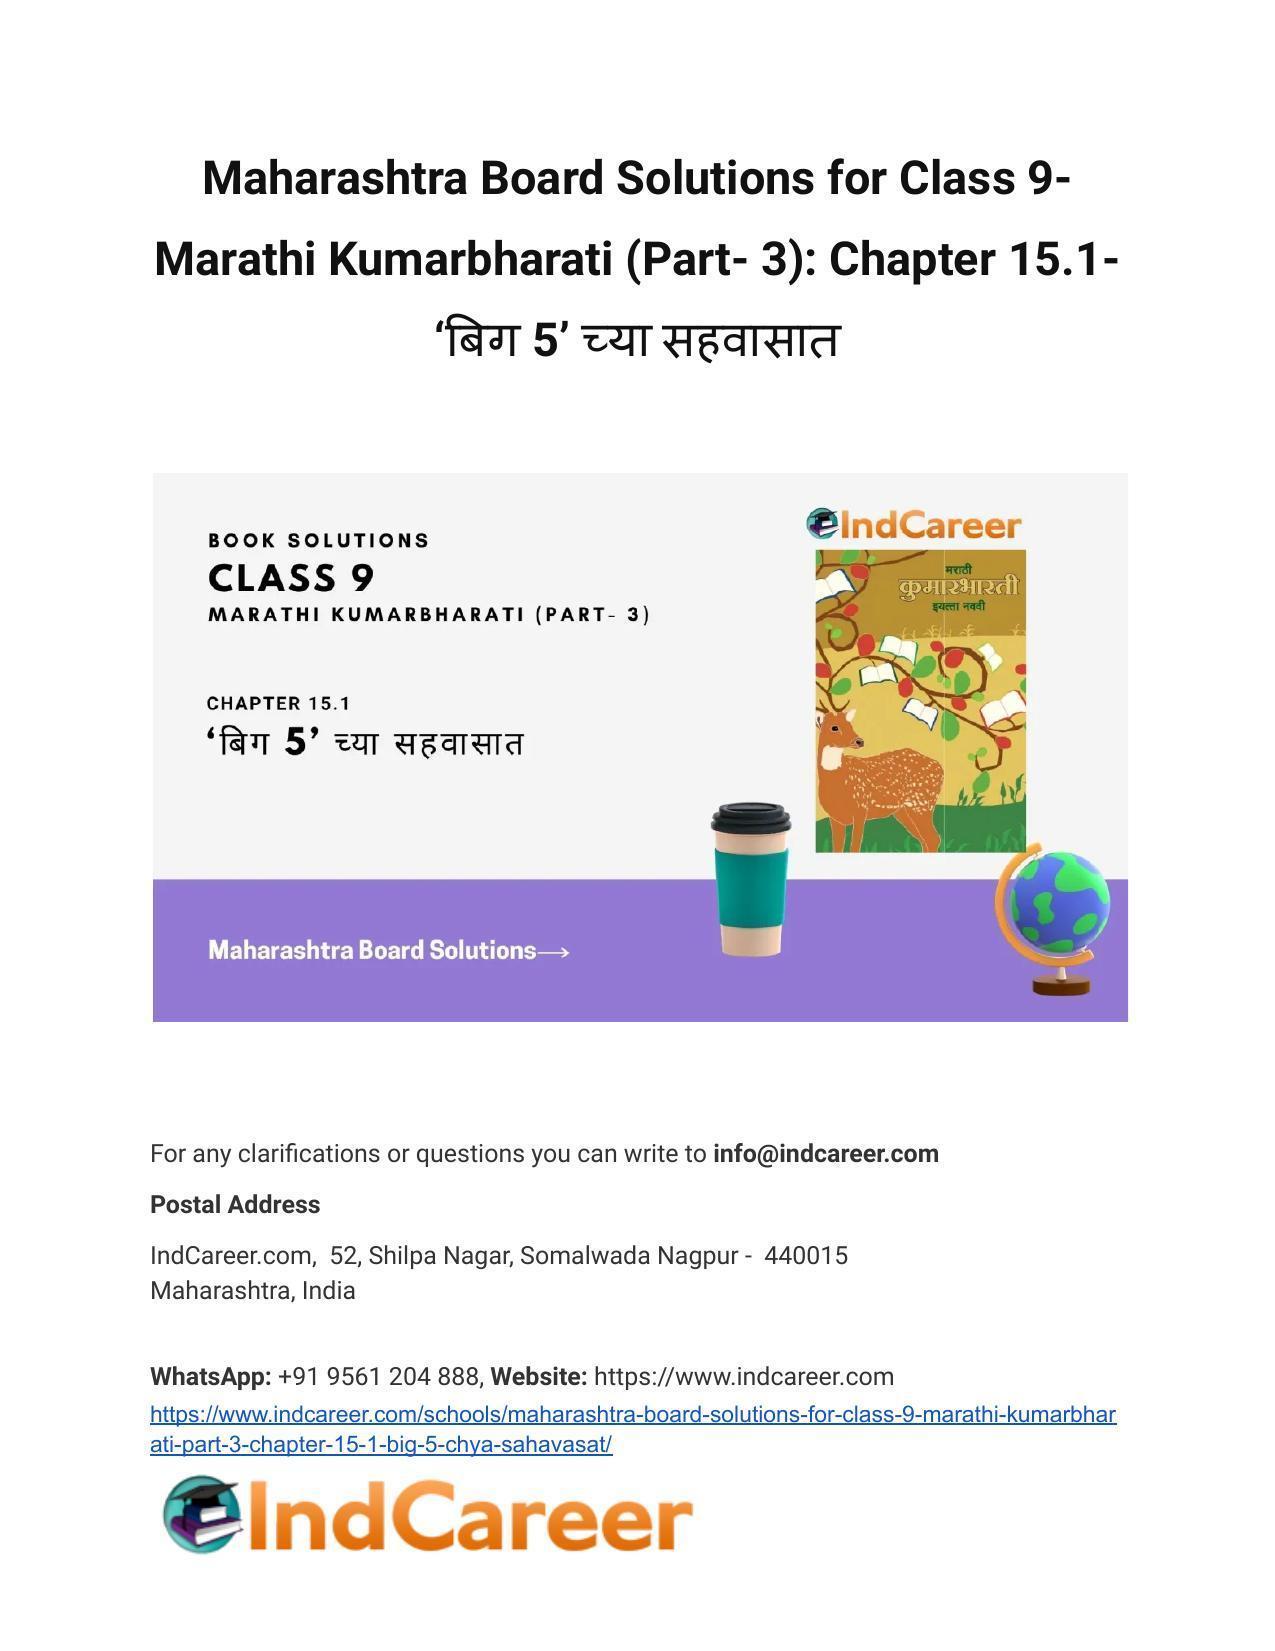 Maharashtra Board Solutions for Class 9- Marathi Kumarbharati (Part- 3): Chapter 15.1- ‘बिग 5’ च्या सहवासात - Page 1